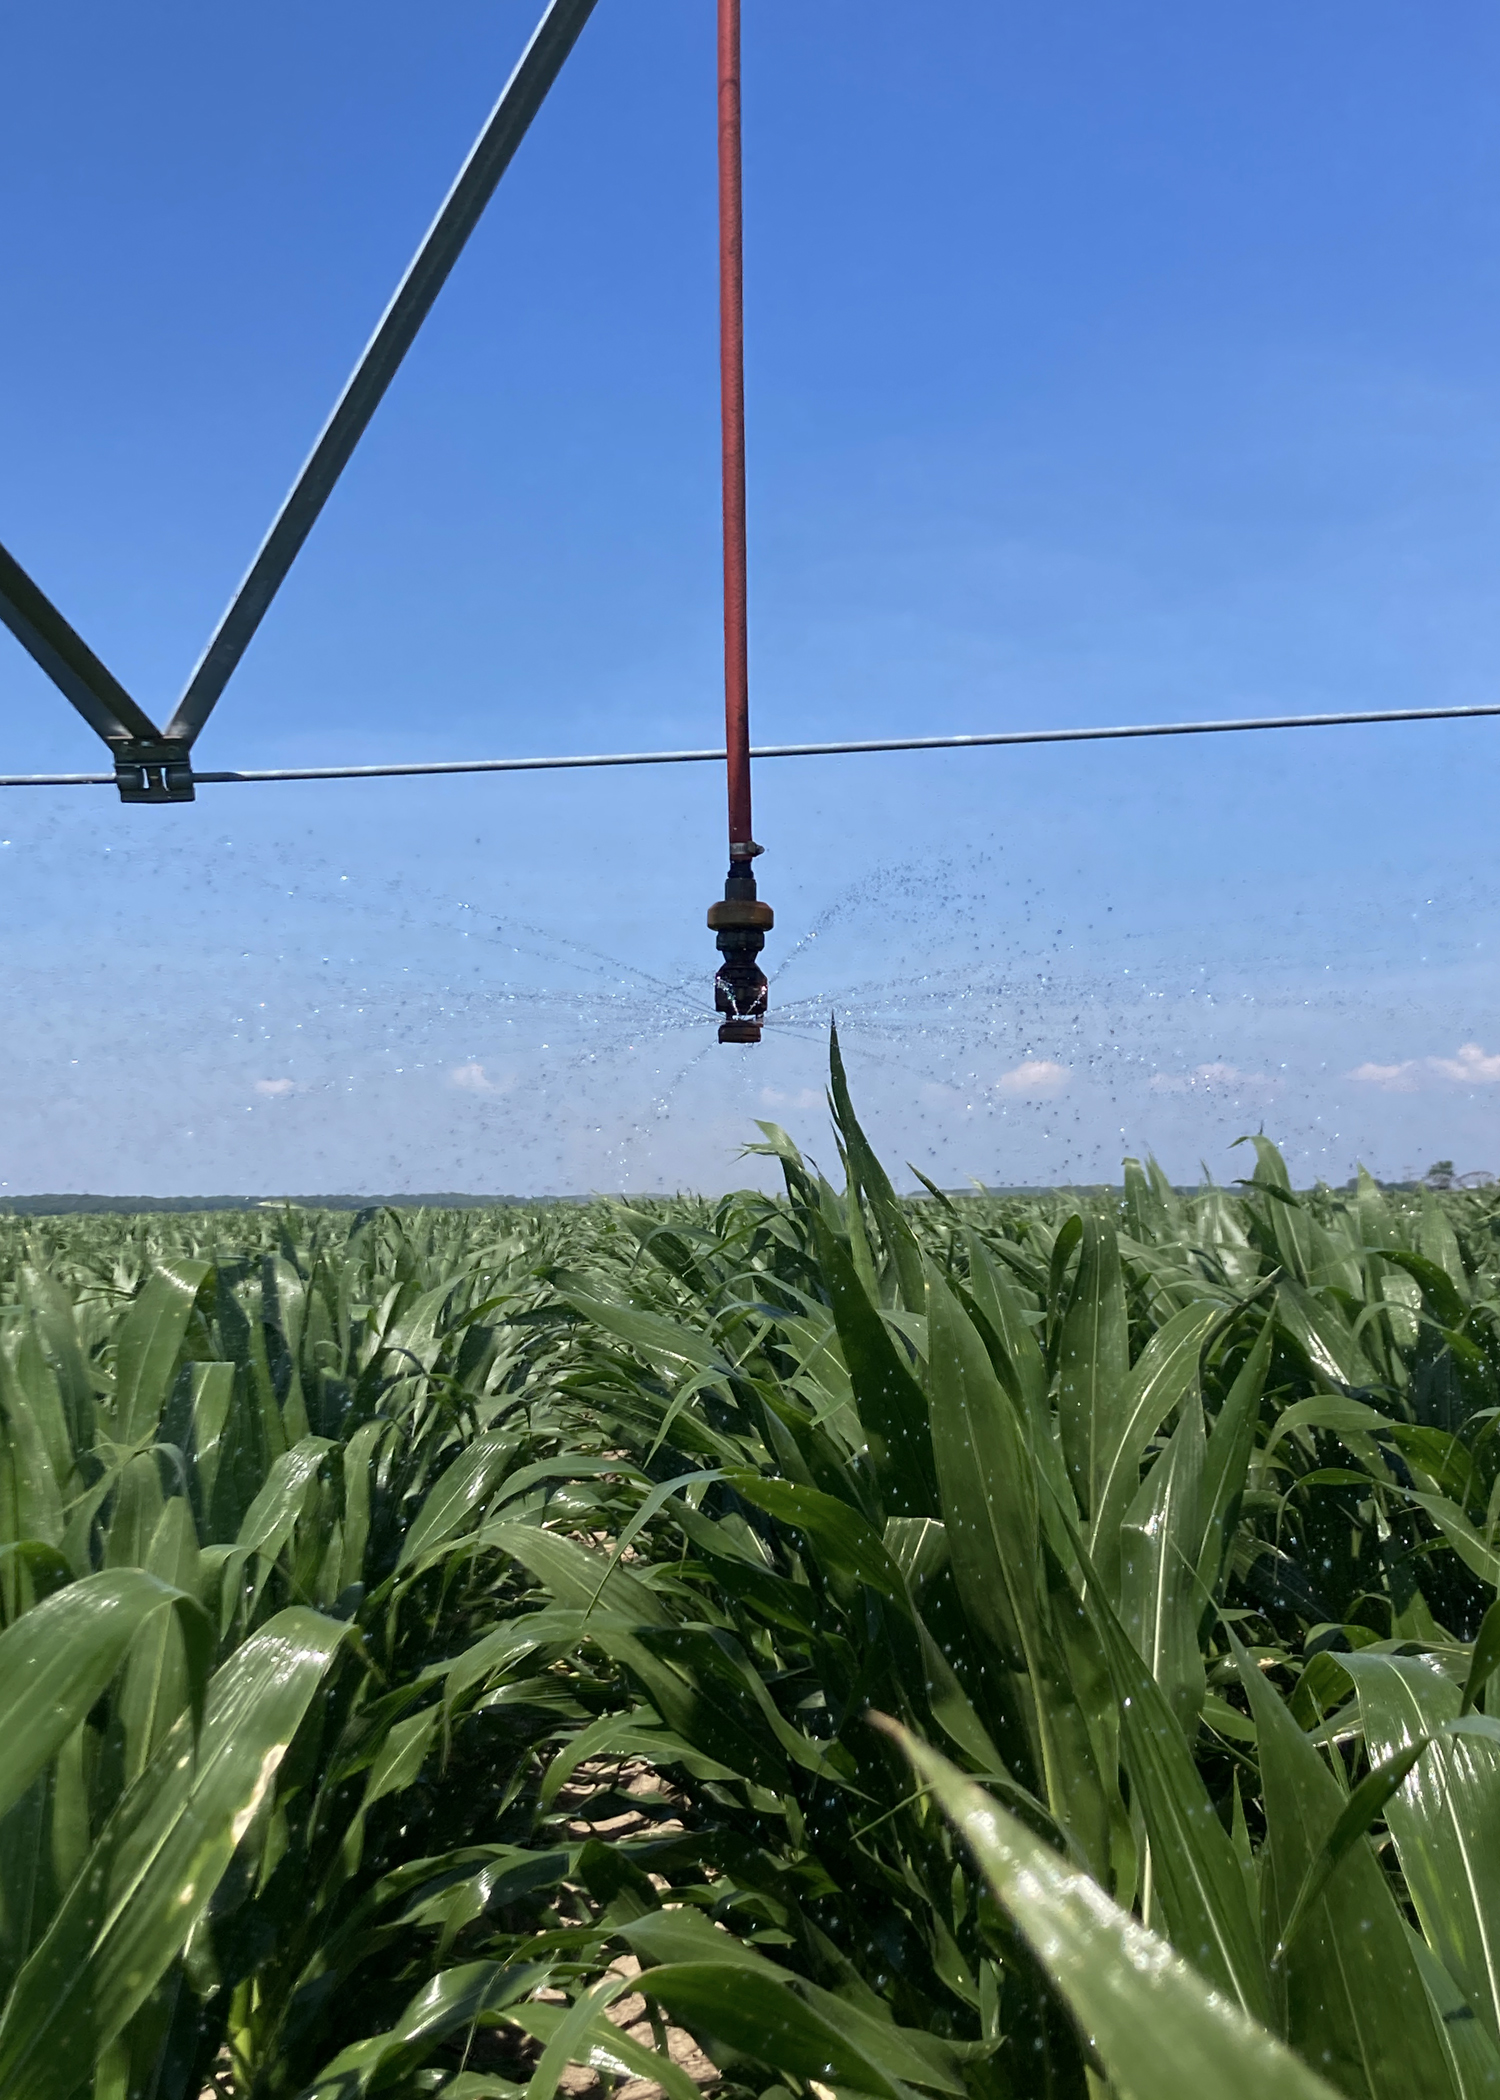 A hanging sprinkler dispenses water over corn plants.